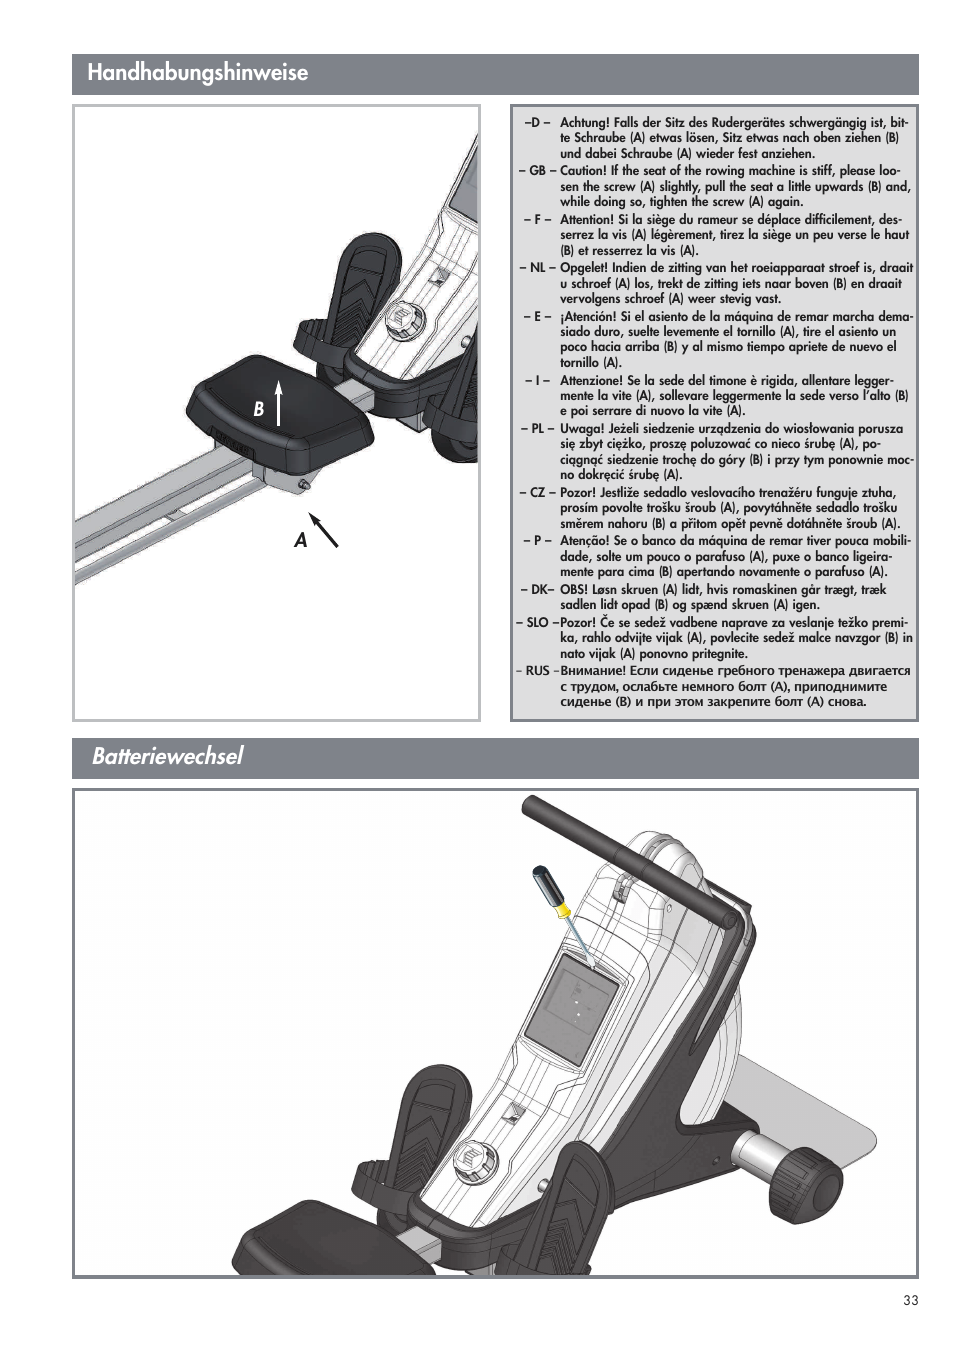 Handhabungshinweise, Batteriewechsel | Kettler Coach M (maintenance) User  Manual | Page 11 / 17